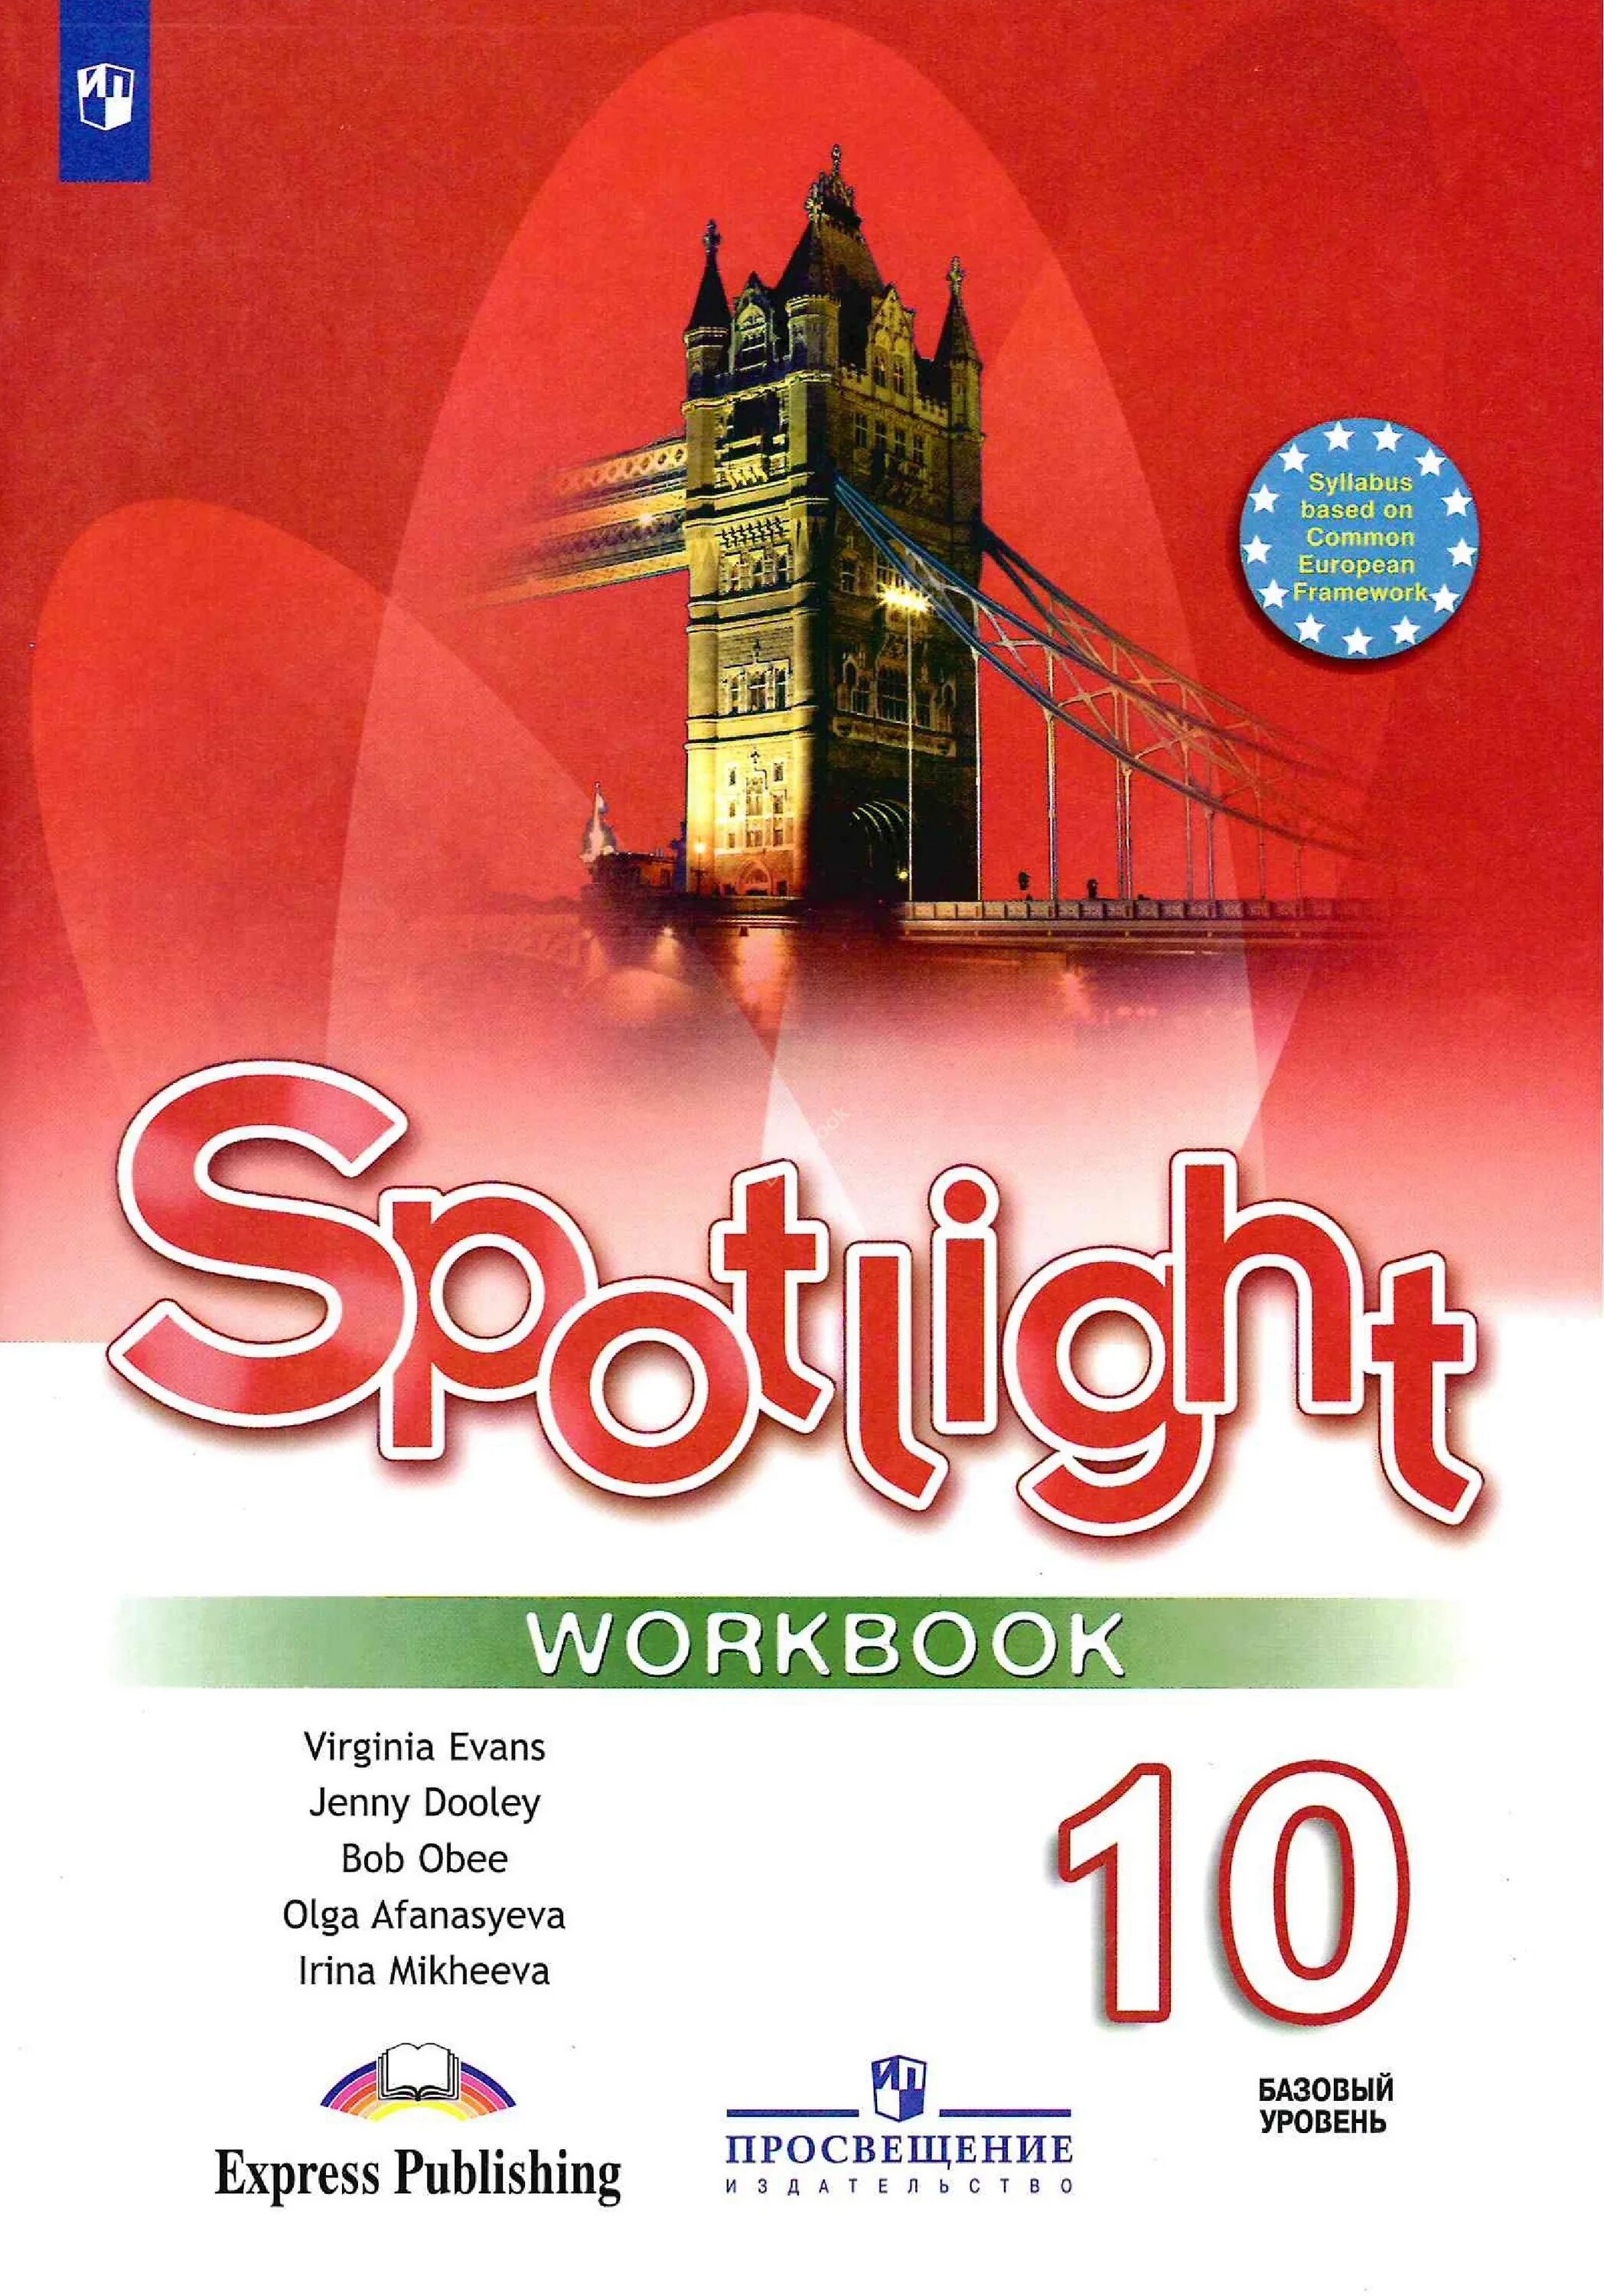 Рабочая тетрадь spotlight 7 стр 54. Workbook Spotlight 5 класс ваулина. Spotlight 5 Workbook английский язык Эванс. Англ 5 класс рабочая тетрадь Spotlight. Тетради для английского языка 5 класс спотлайт.